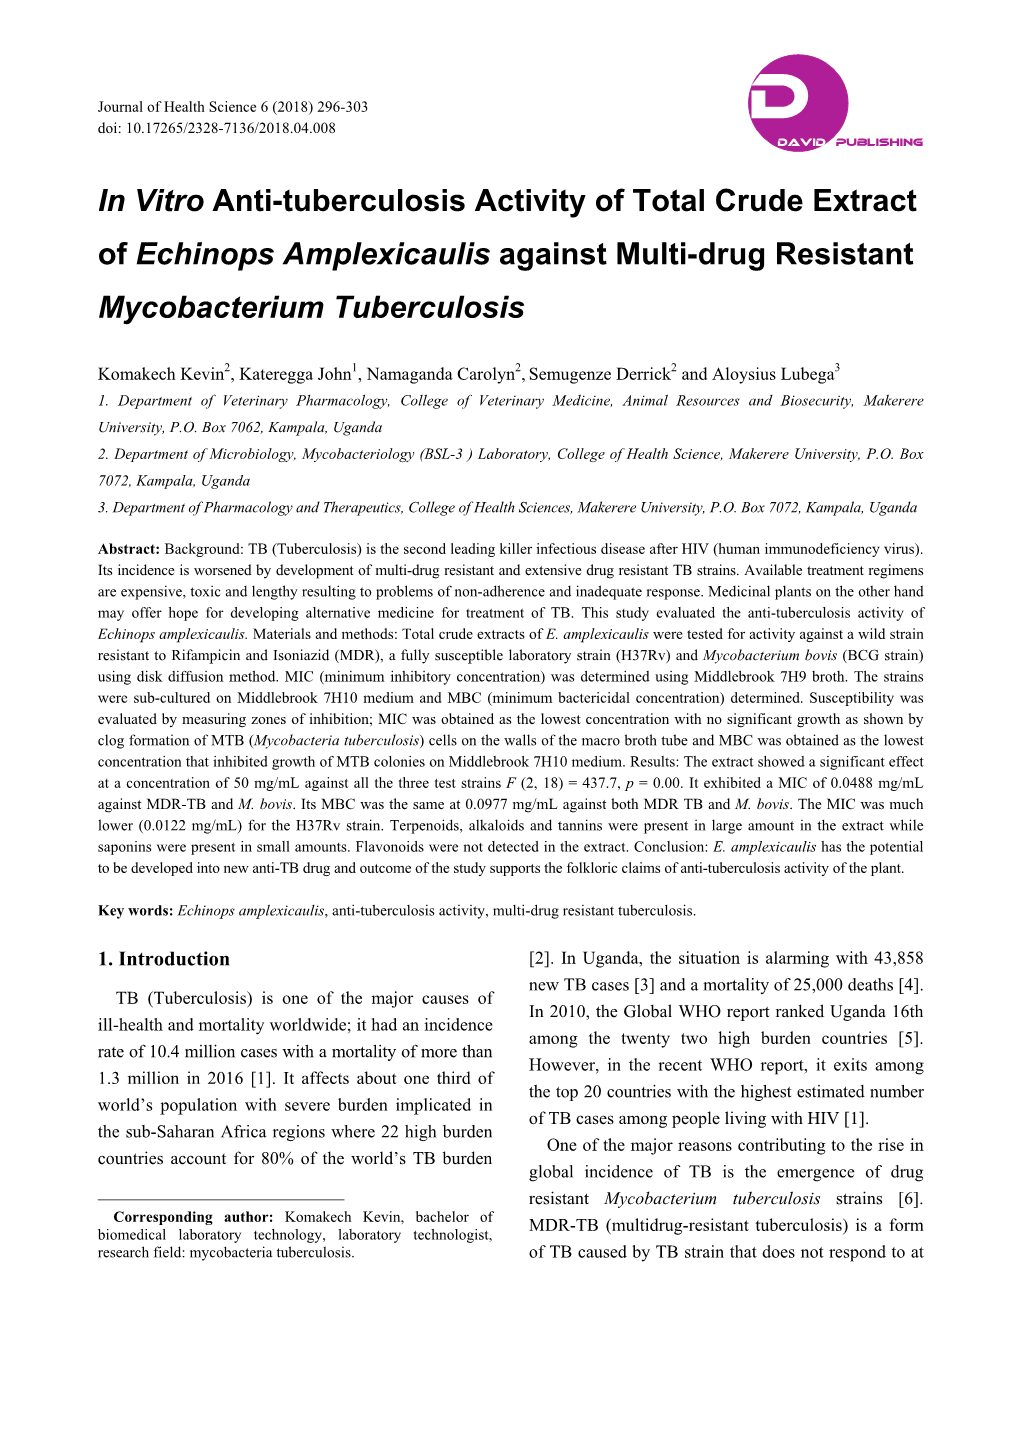 In Vitro Anti-Tuberculosis Activity of Total Crude Extract of Echinops Amplexicaulis Against Multi-Drug Resistant Mycobacterium Tuberculosis